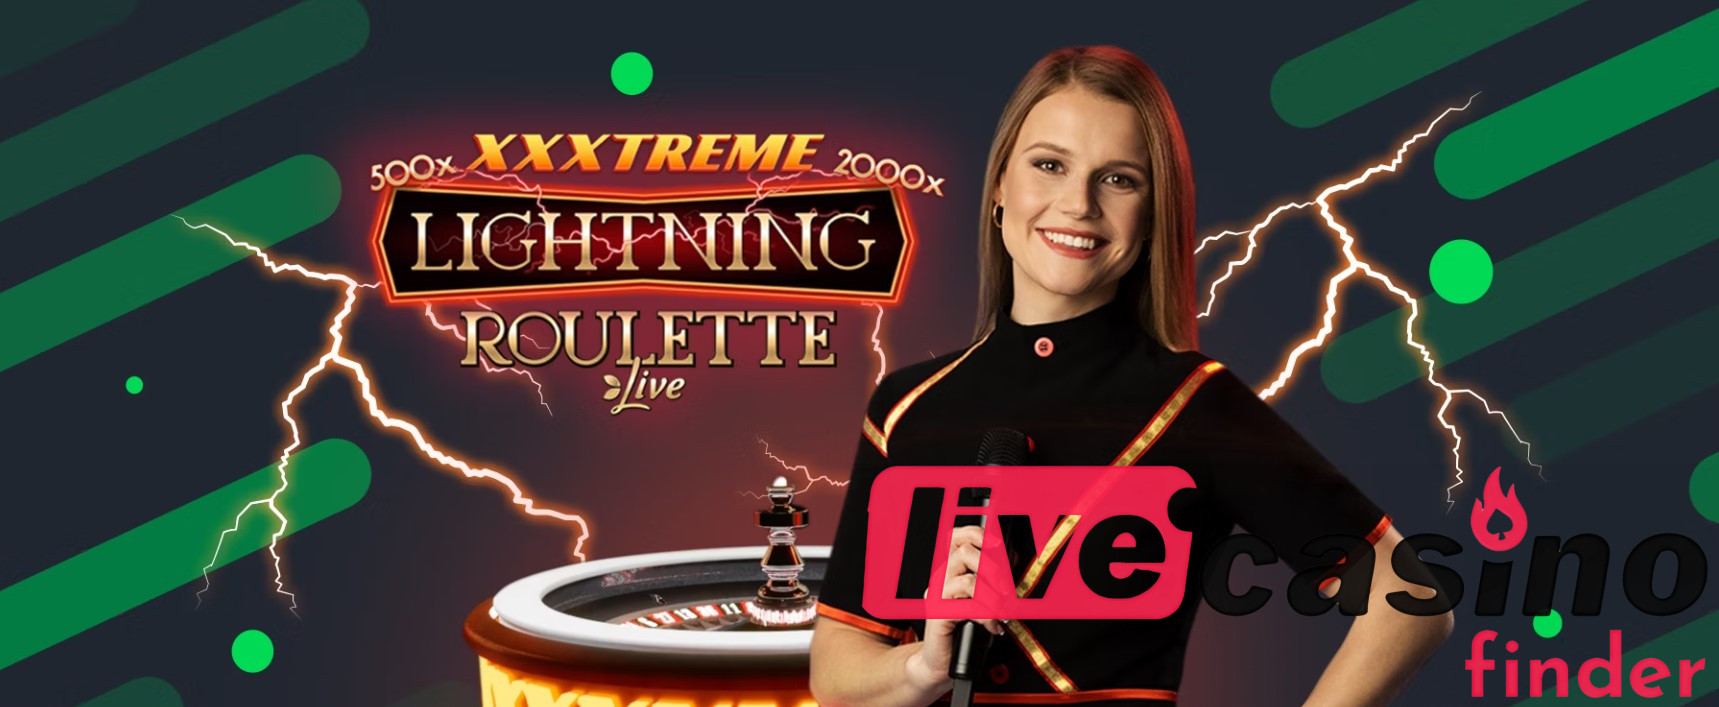 XXXtreme Lightning Roulette용 소프트웨어 제공업체.